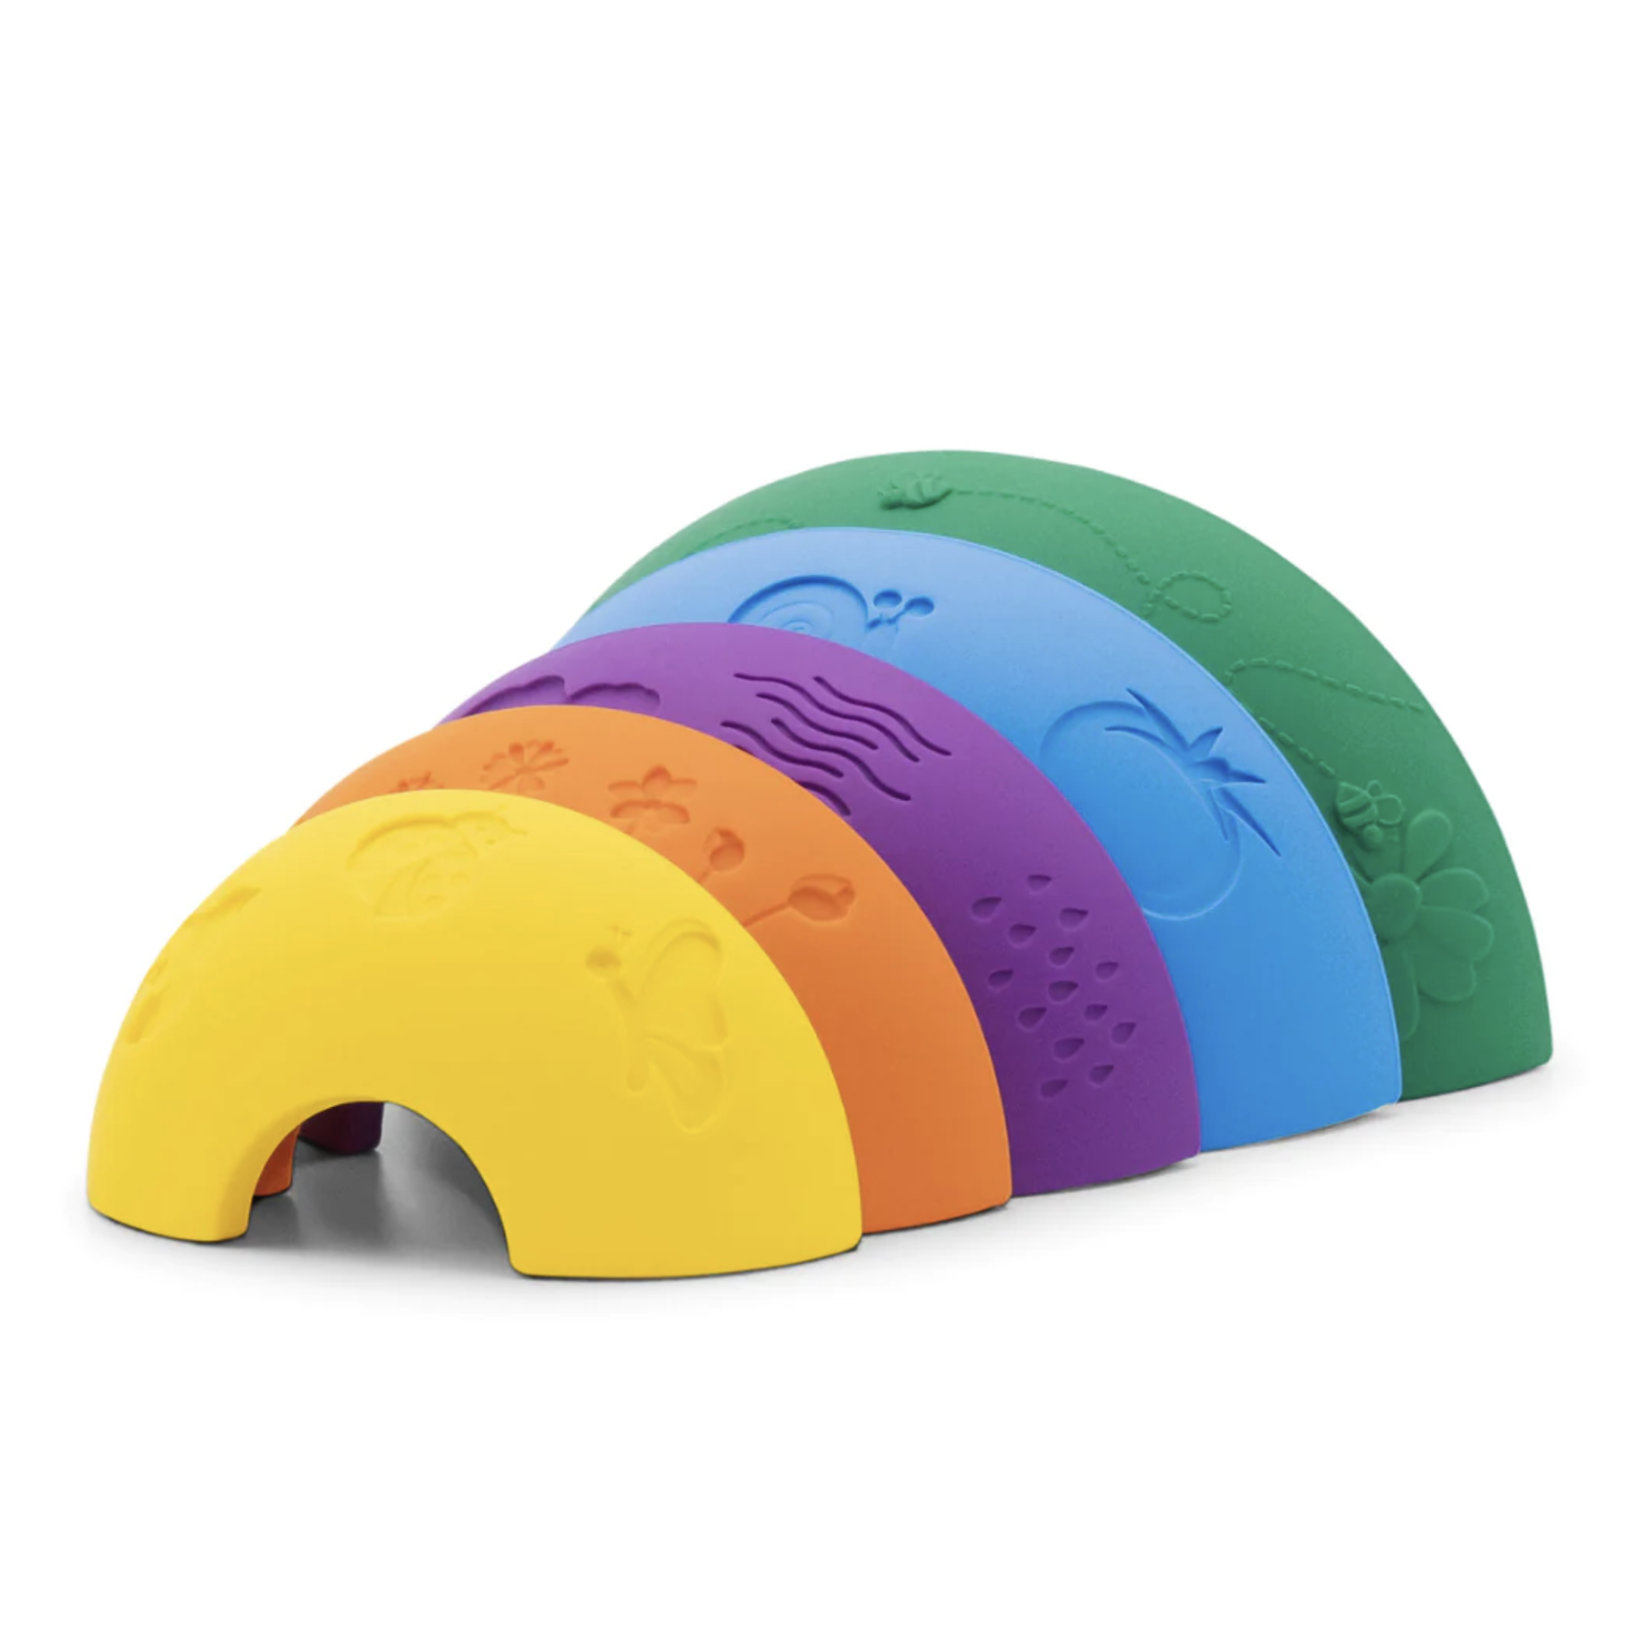 Jellystone Designs Over the Rainbow-Rainbow Bright